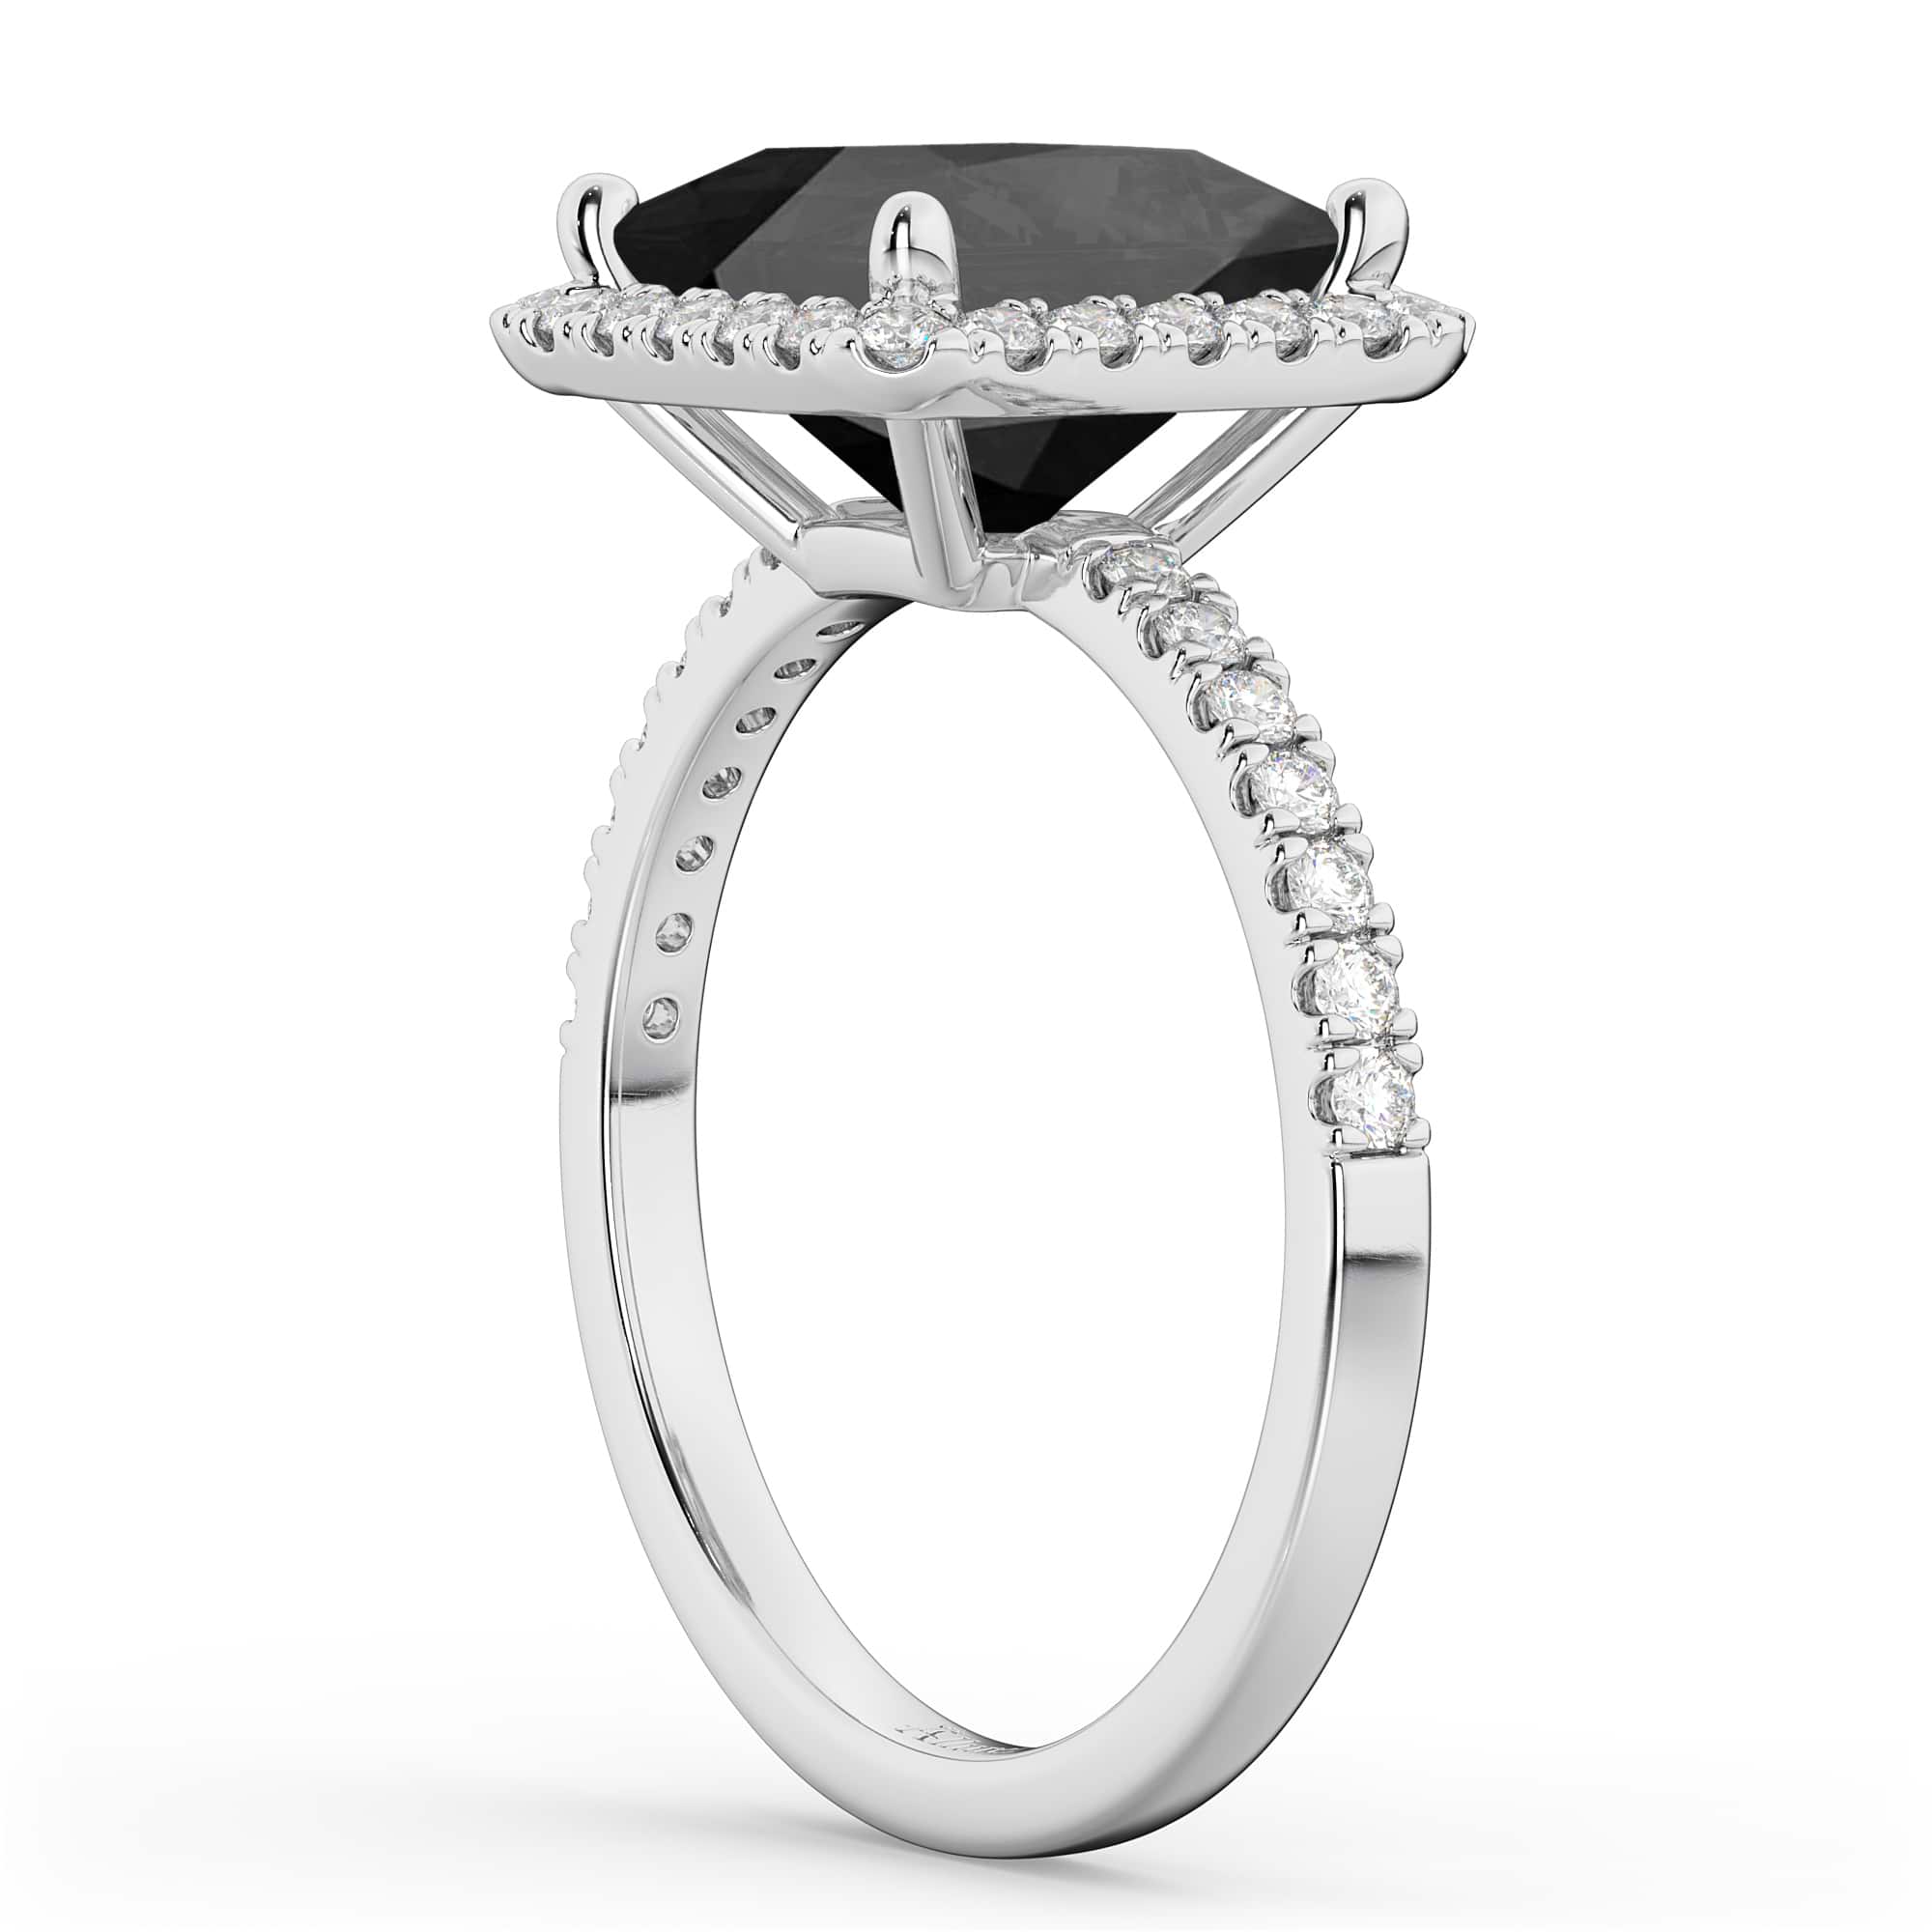 Princess Cut Halo Black Onyx & Diamond Engagement Ring 14K White Gold 3.47ct